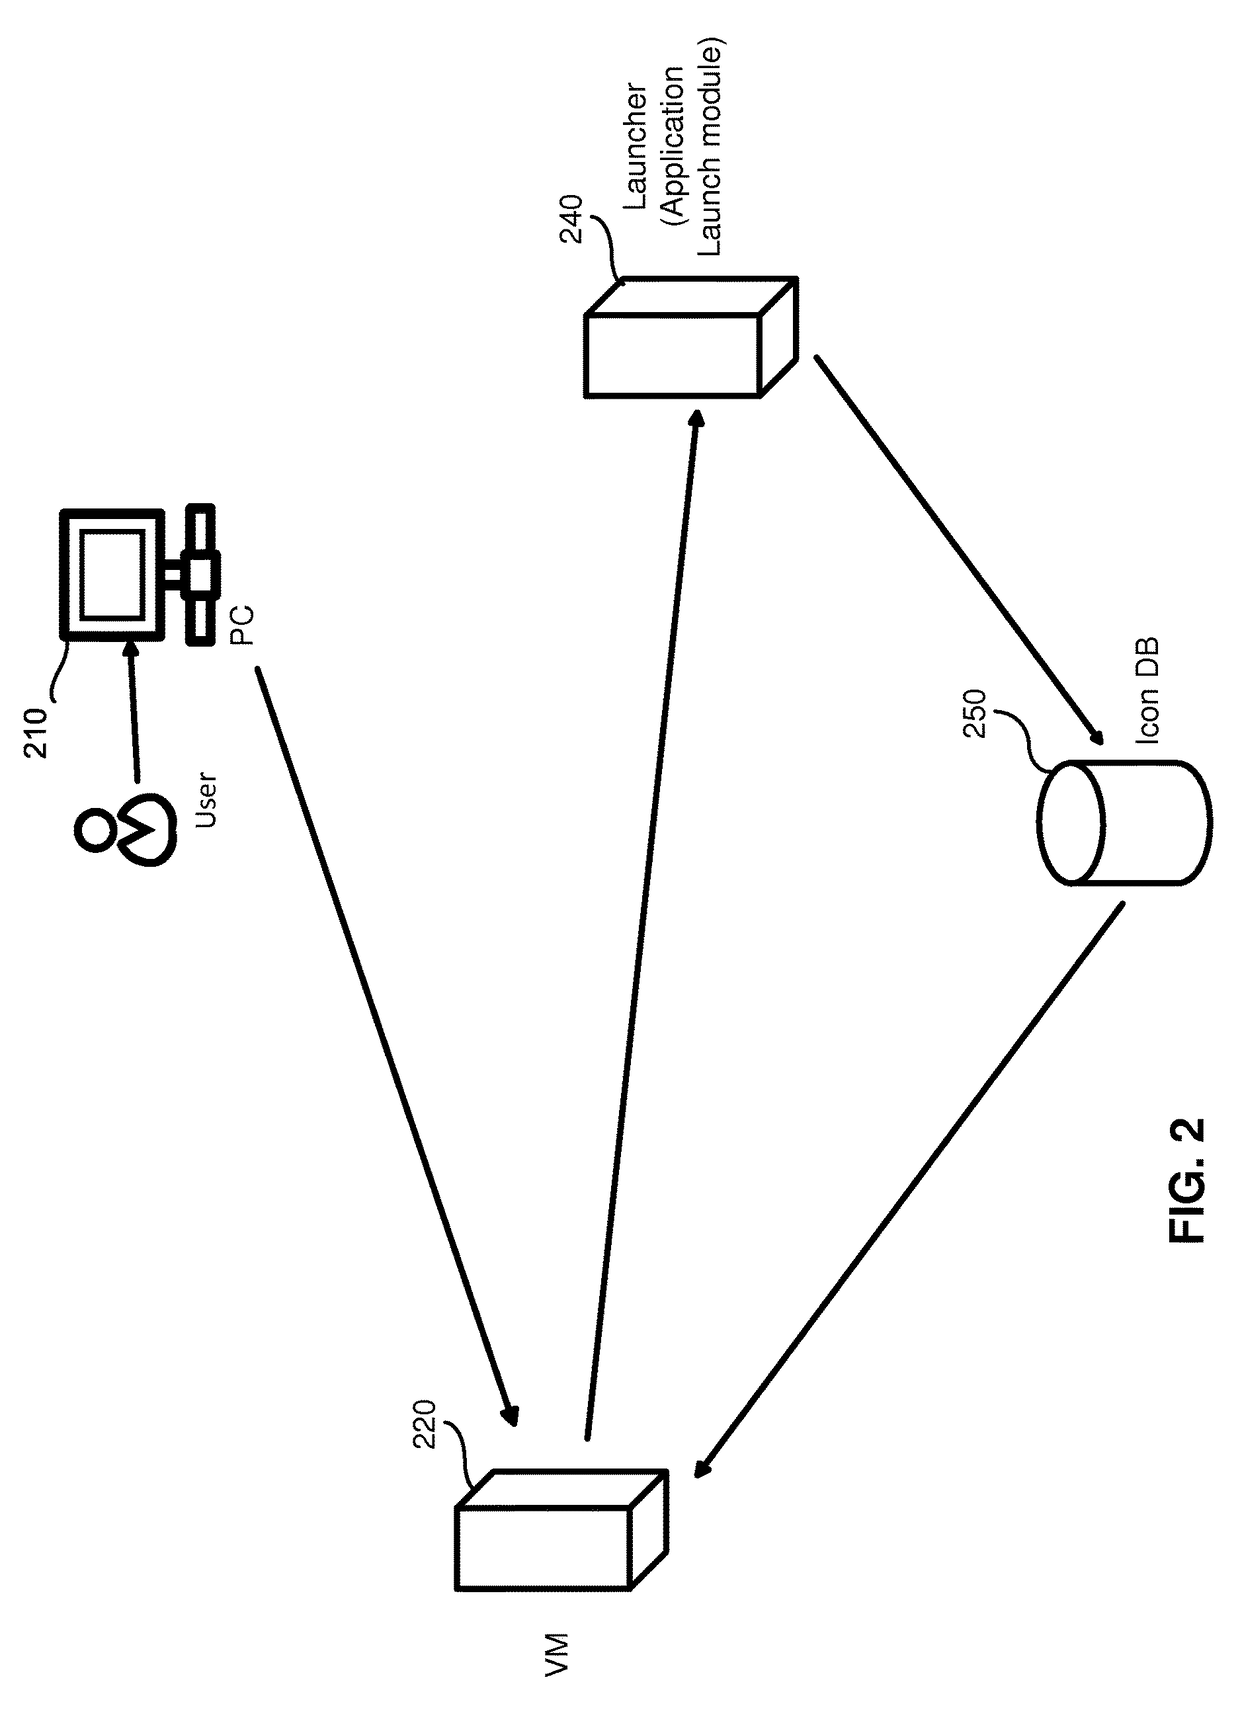 Method for emulation of a virtual OS bookmark on a host desktop